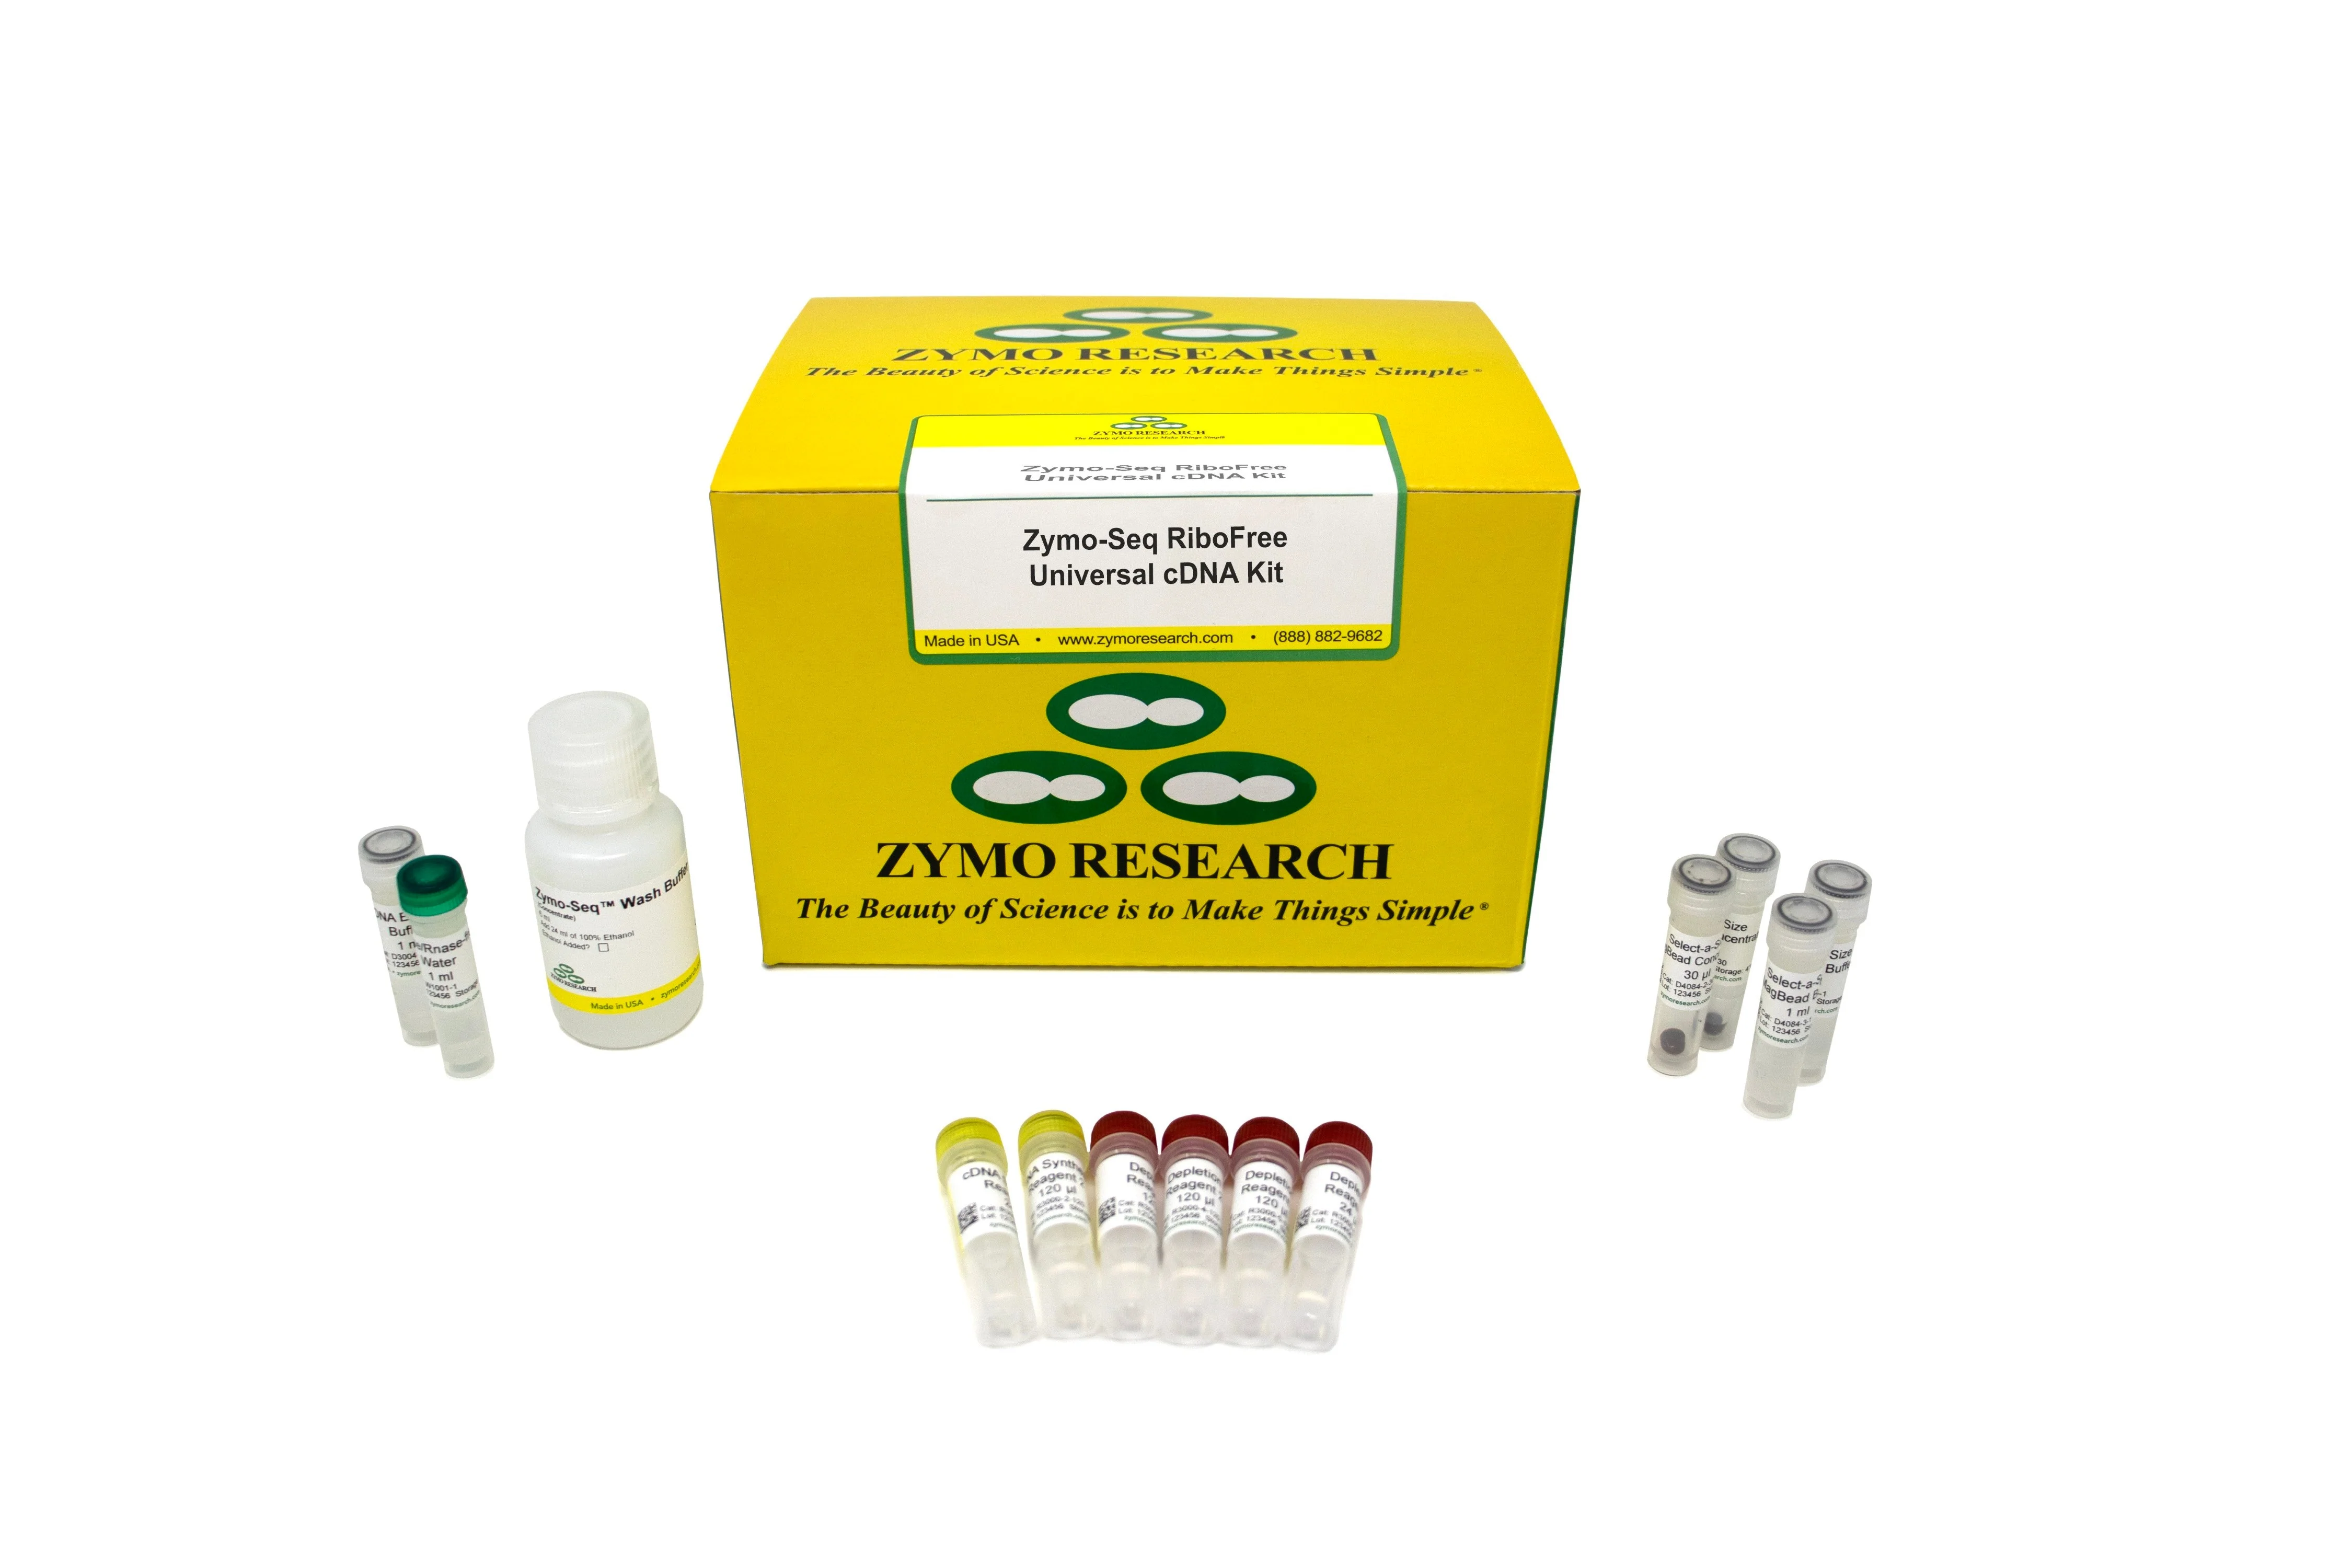 Zymo-Seq RiboFree Universal cDNA Kit